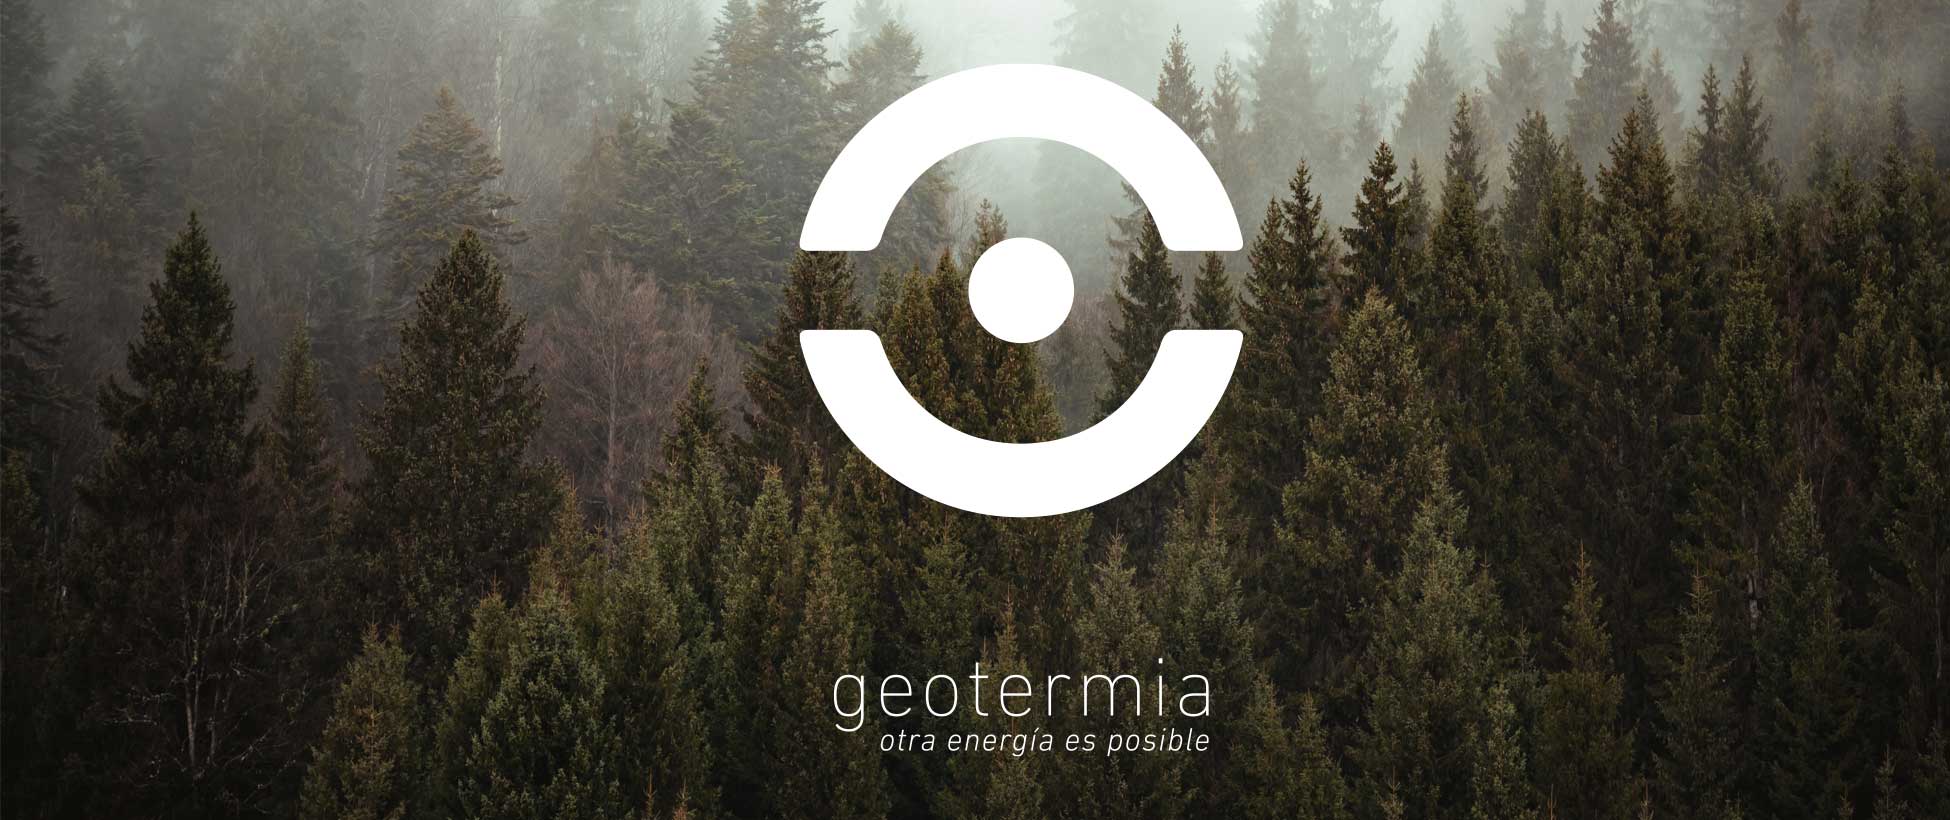 identidad de marca e imagen corporativa de Ekogar geotermia